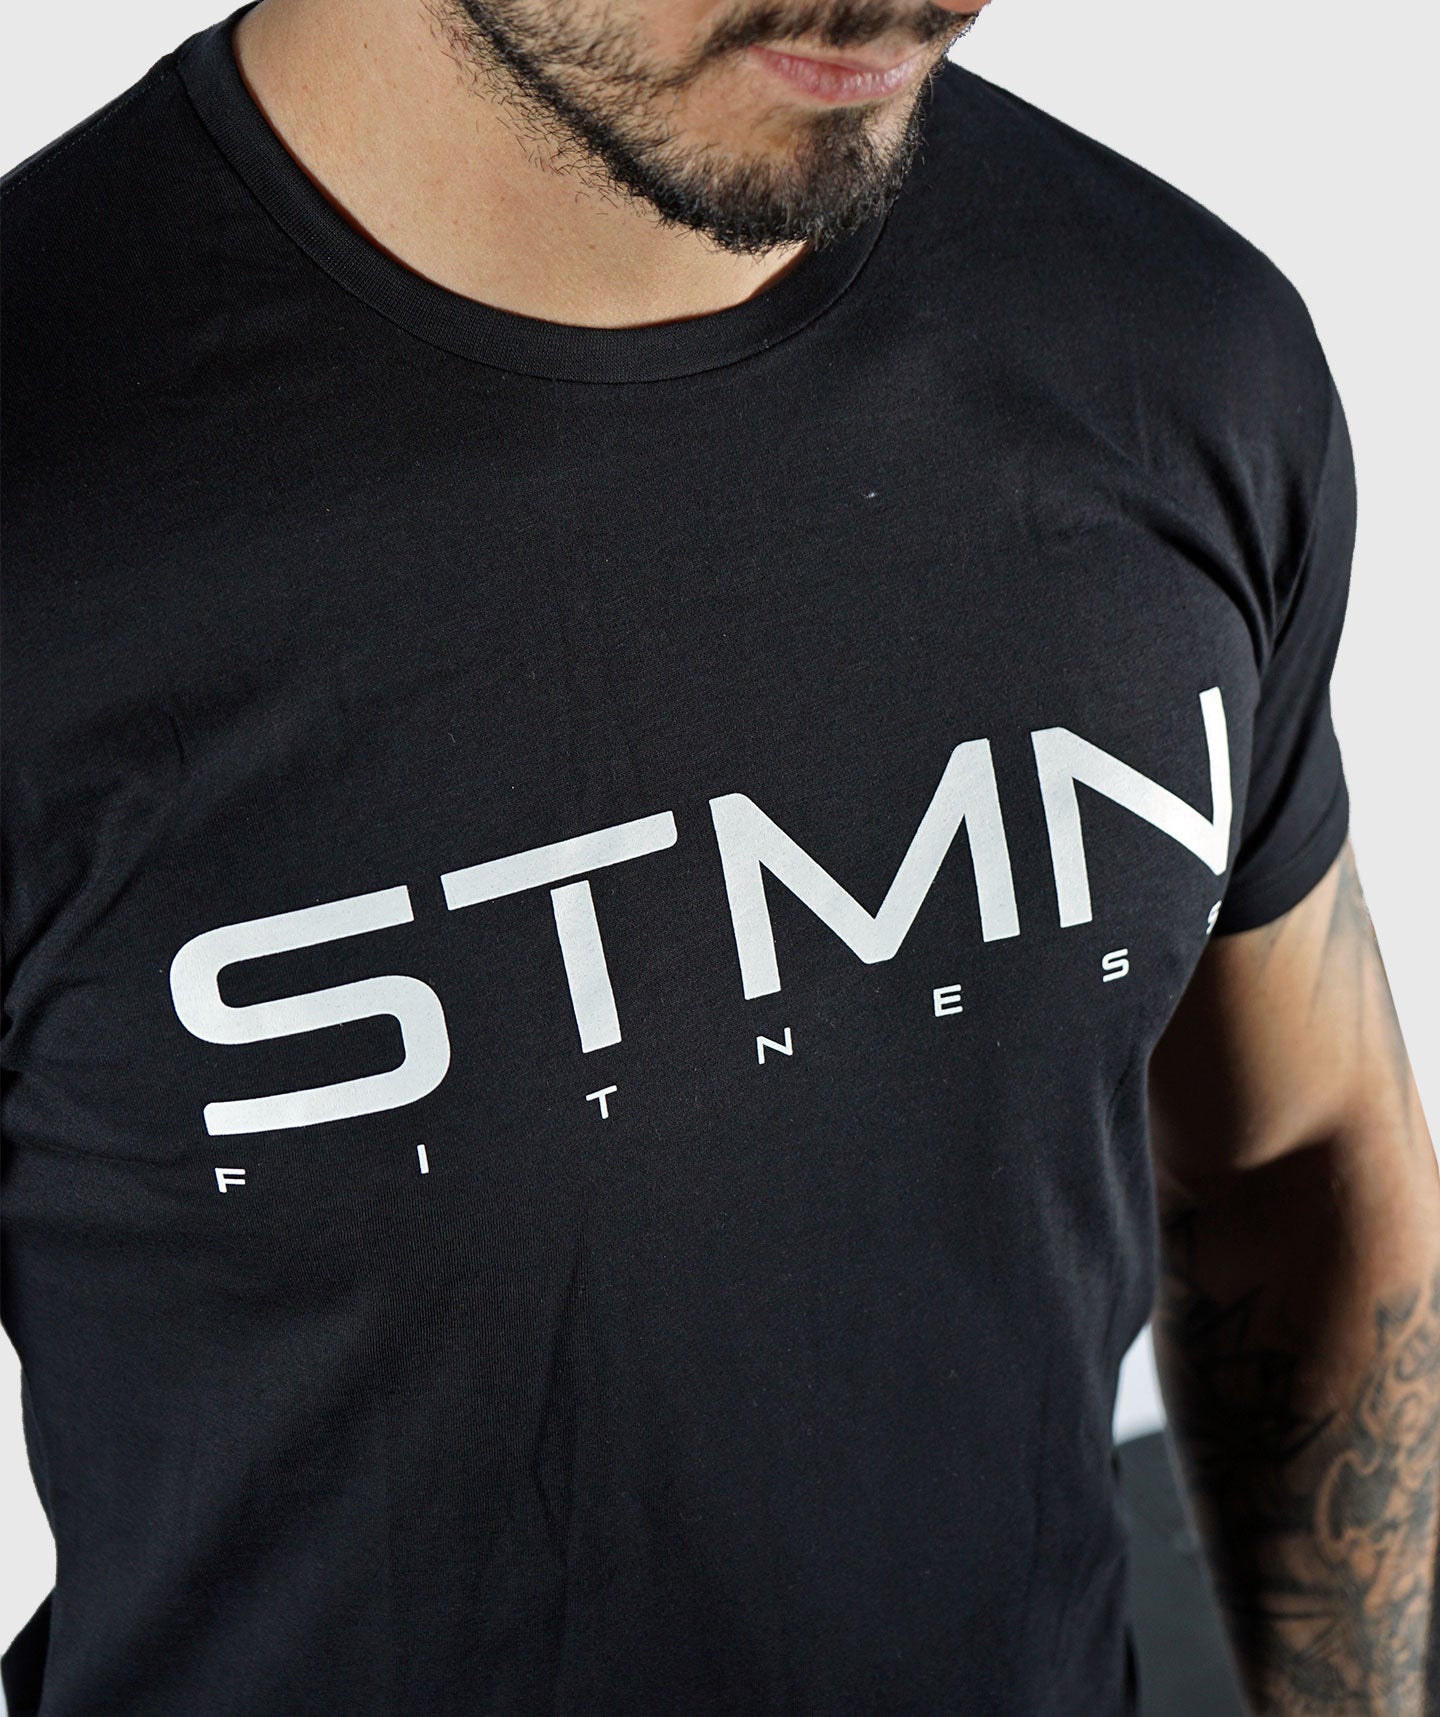 T-shirt Competitor Uomo Nera - STMN Fitness